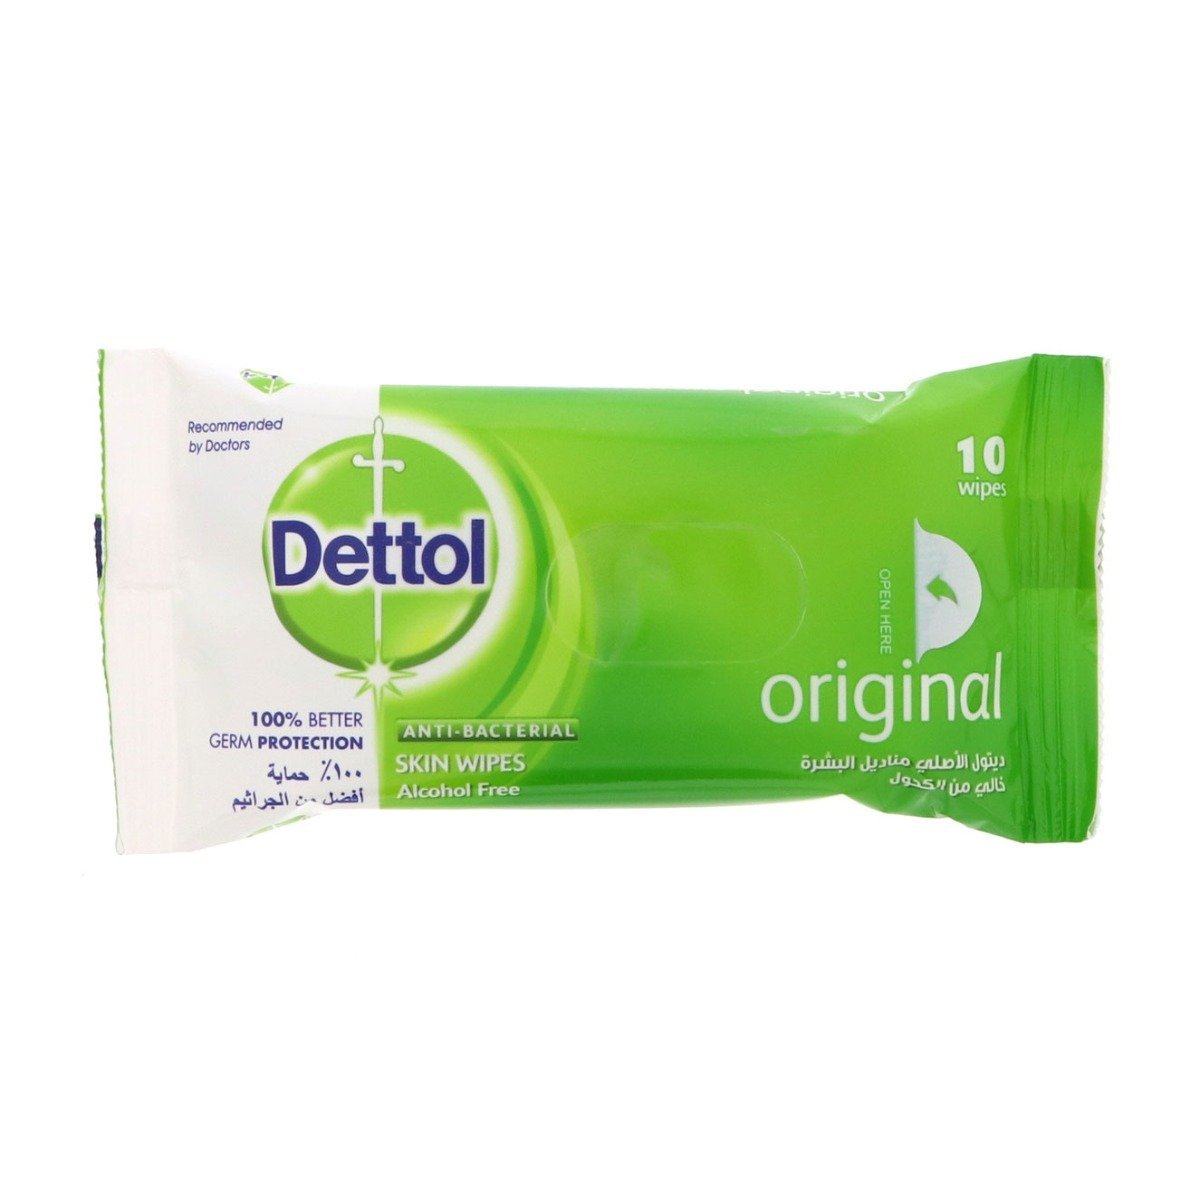 Dettol Skin Wipes Original - Bloom Pharmacy